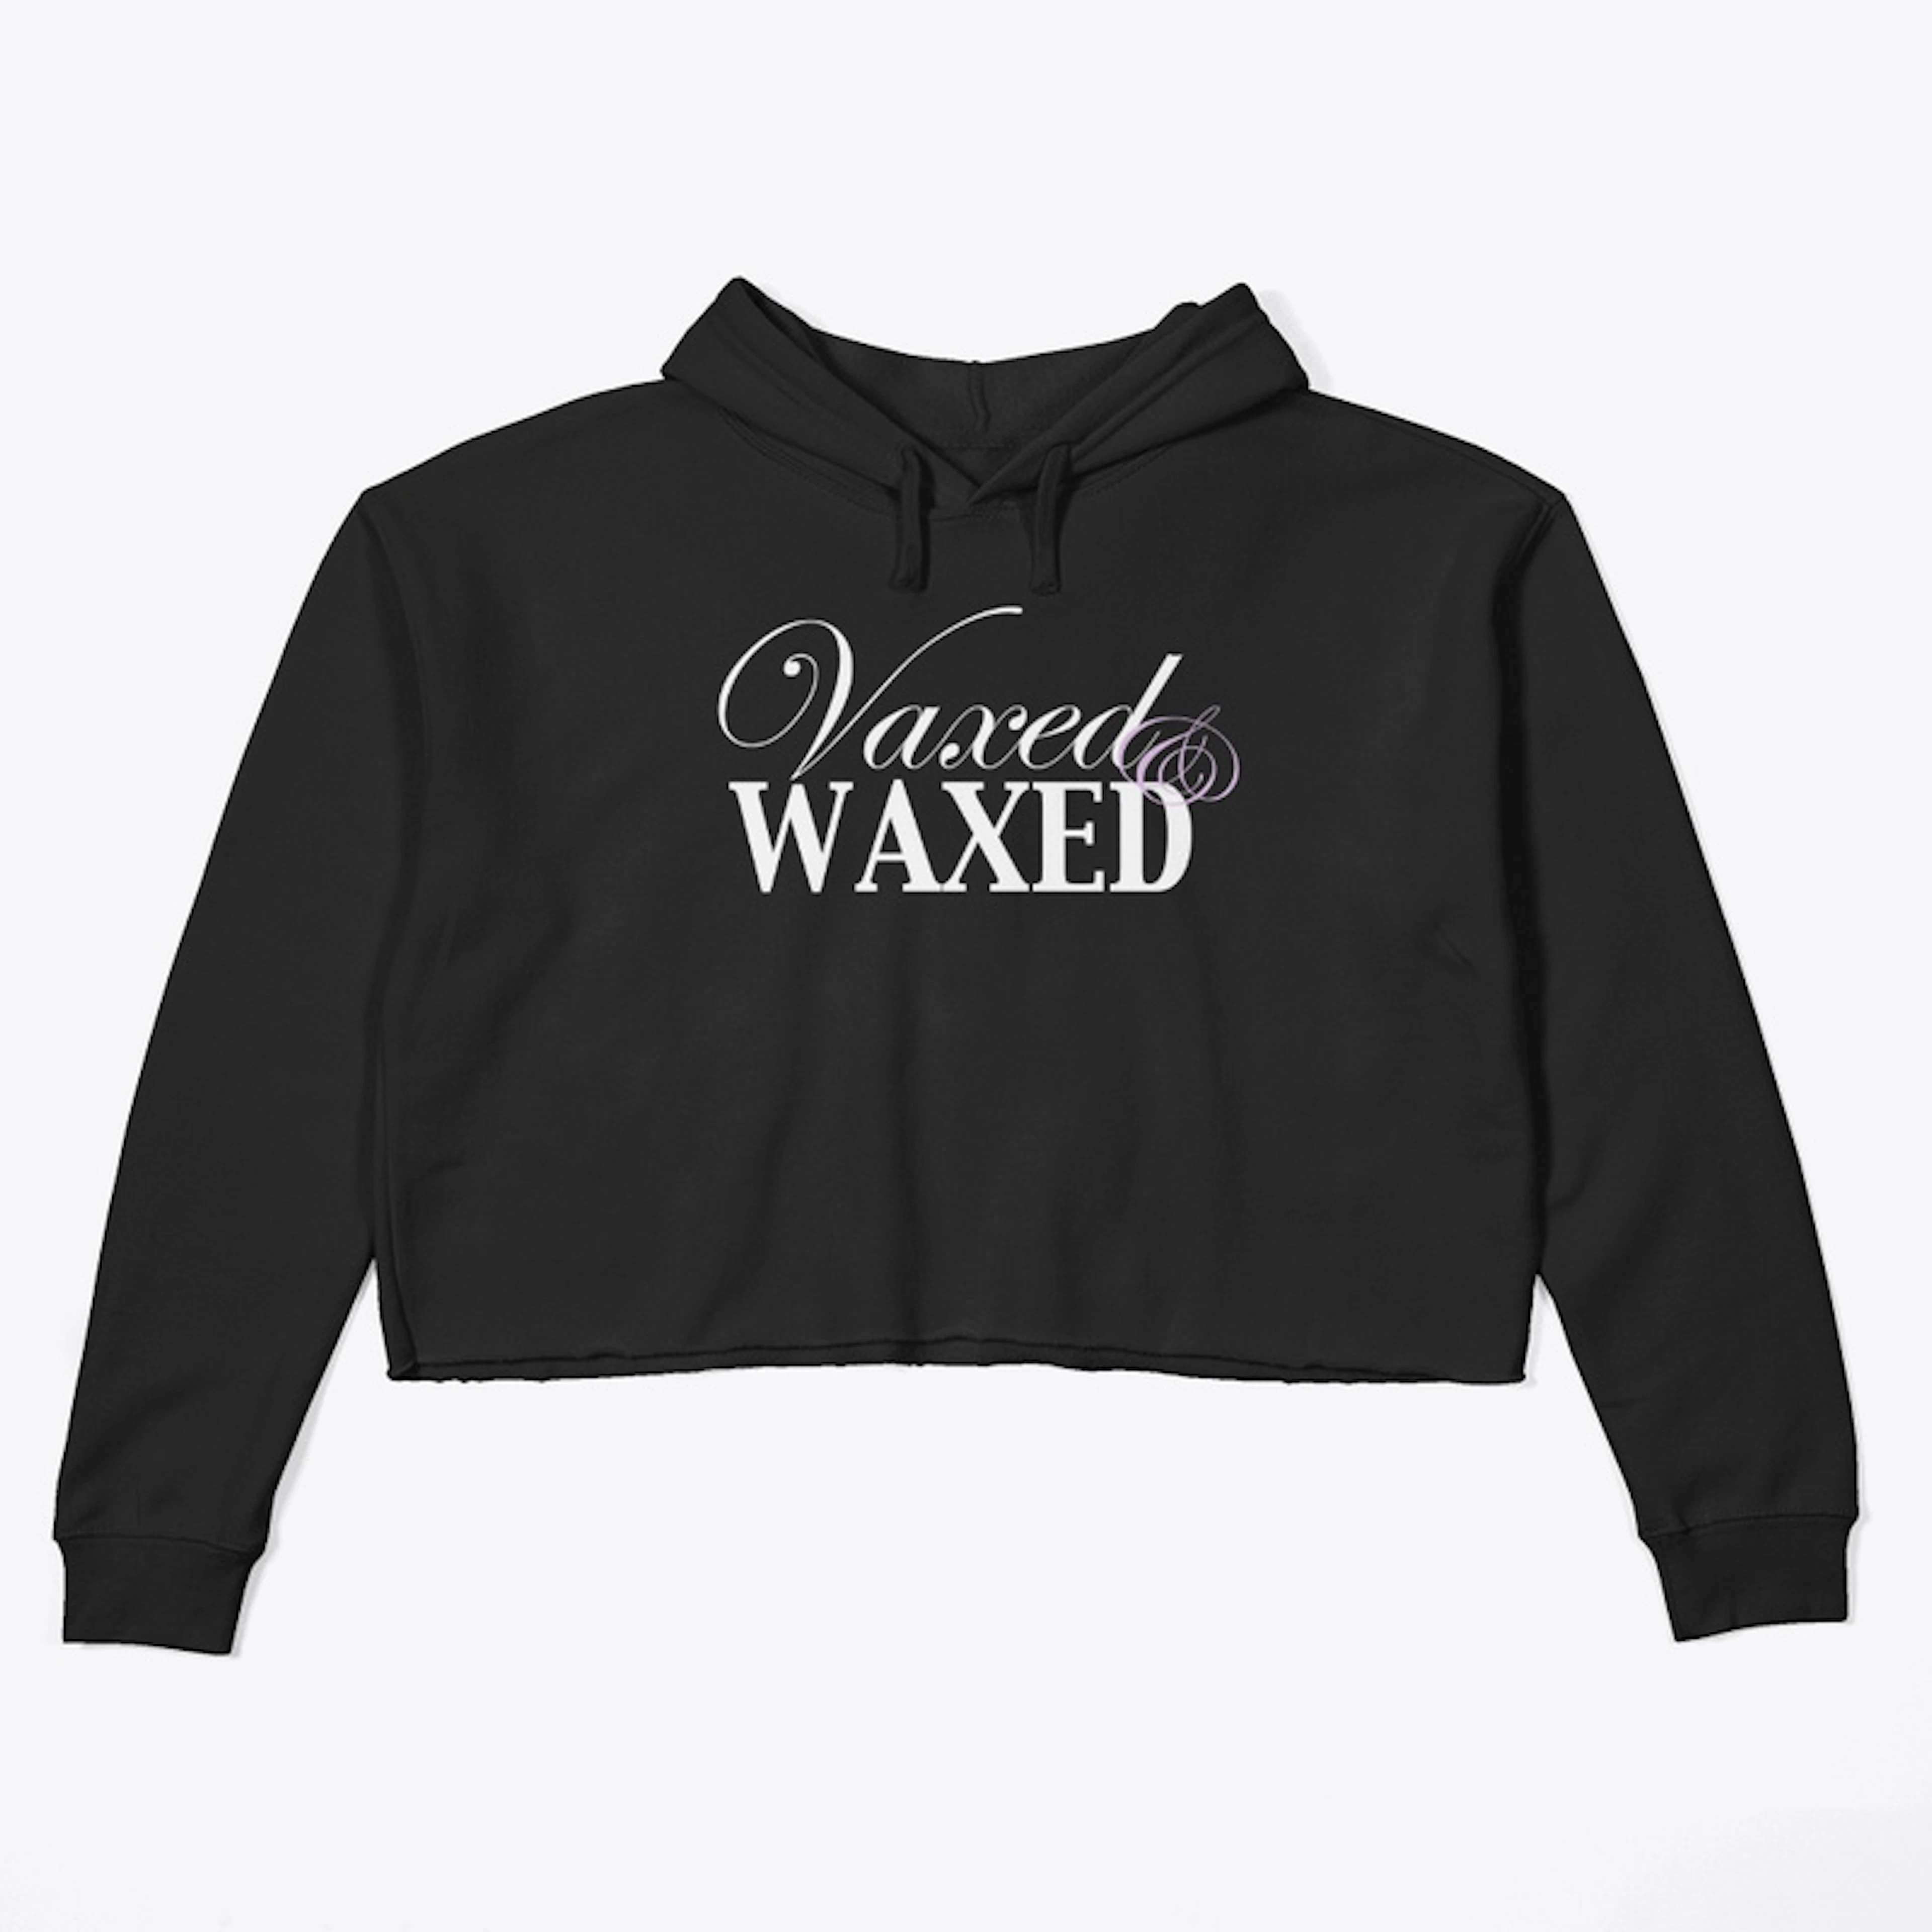 Vaxed and Waxed